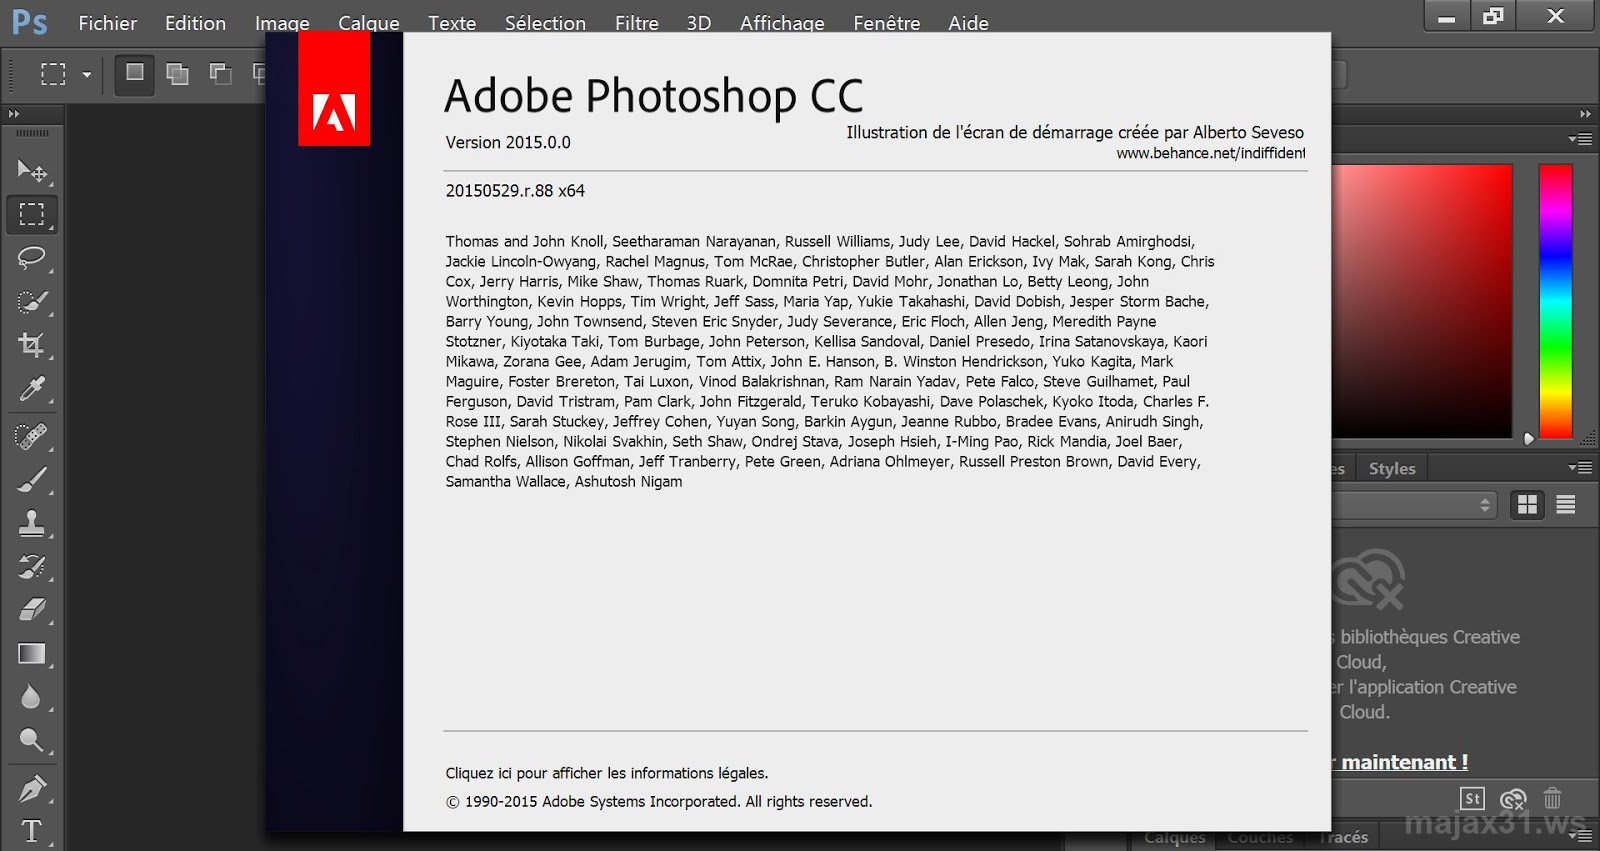 Adobe Photoshop CC 2015 (20150529.r.88) (32 64Bit) Crack  pc